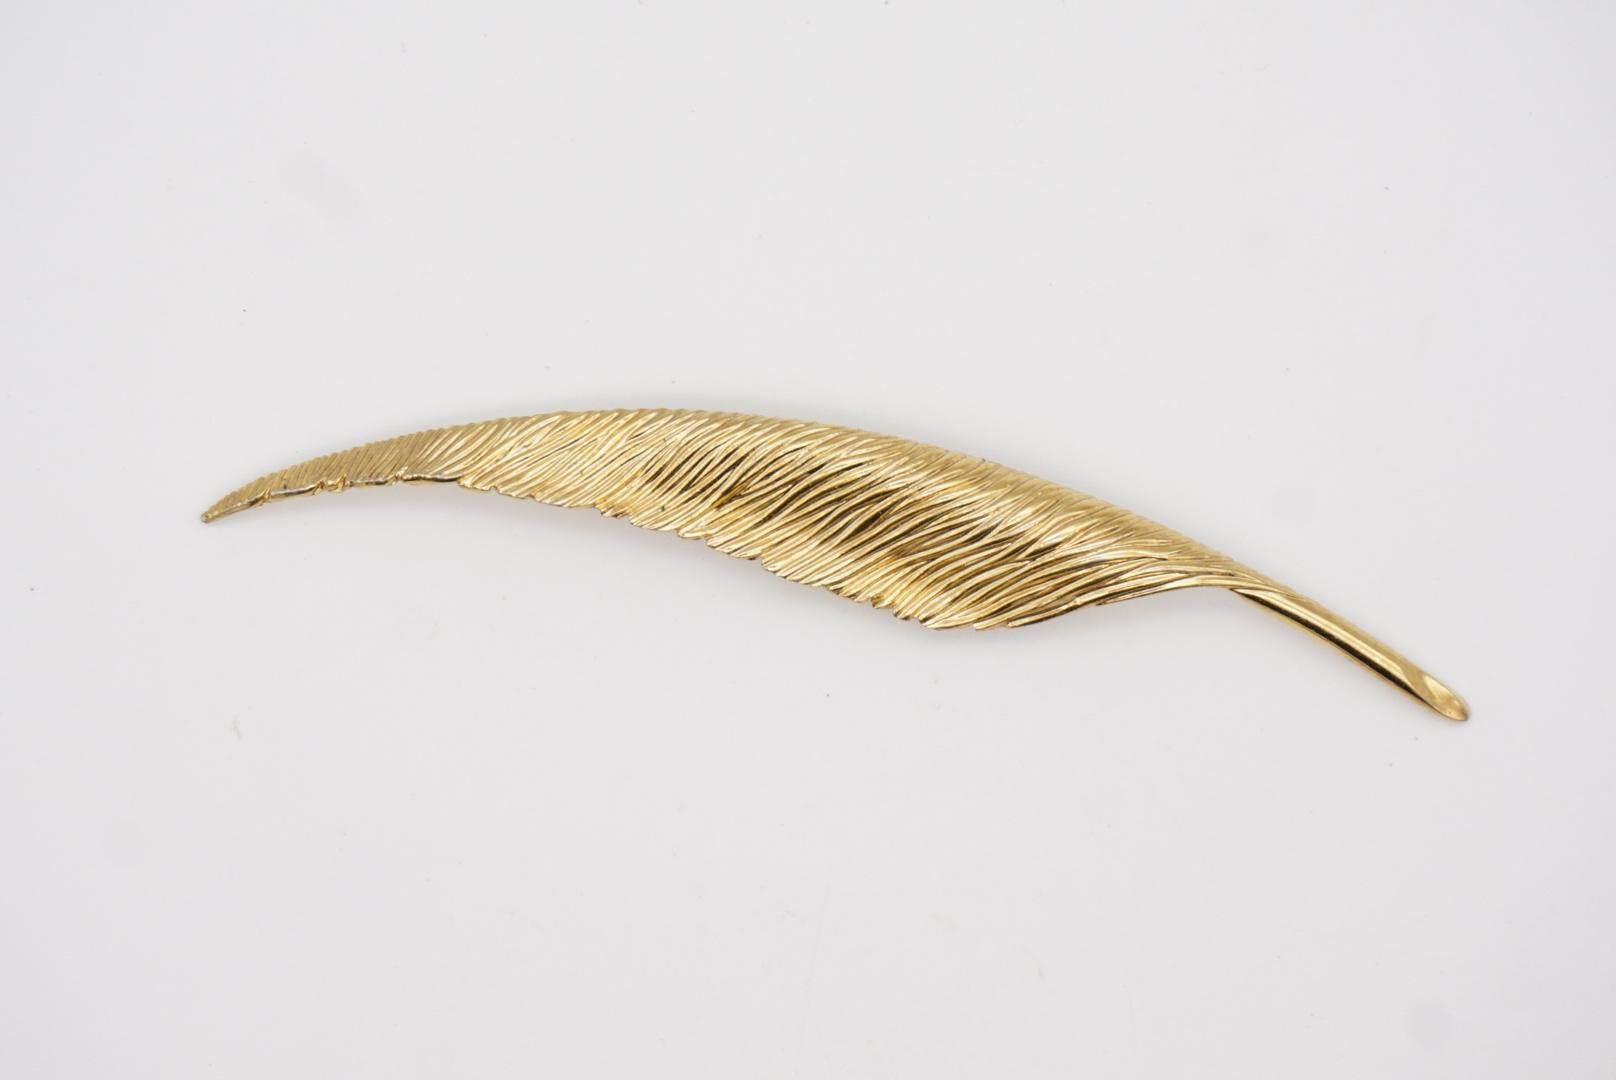 Christian Dior GROSSE 1969 Vintage Textured Long Wave Feather Leaf Reed Brooch For Sale 3